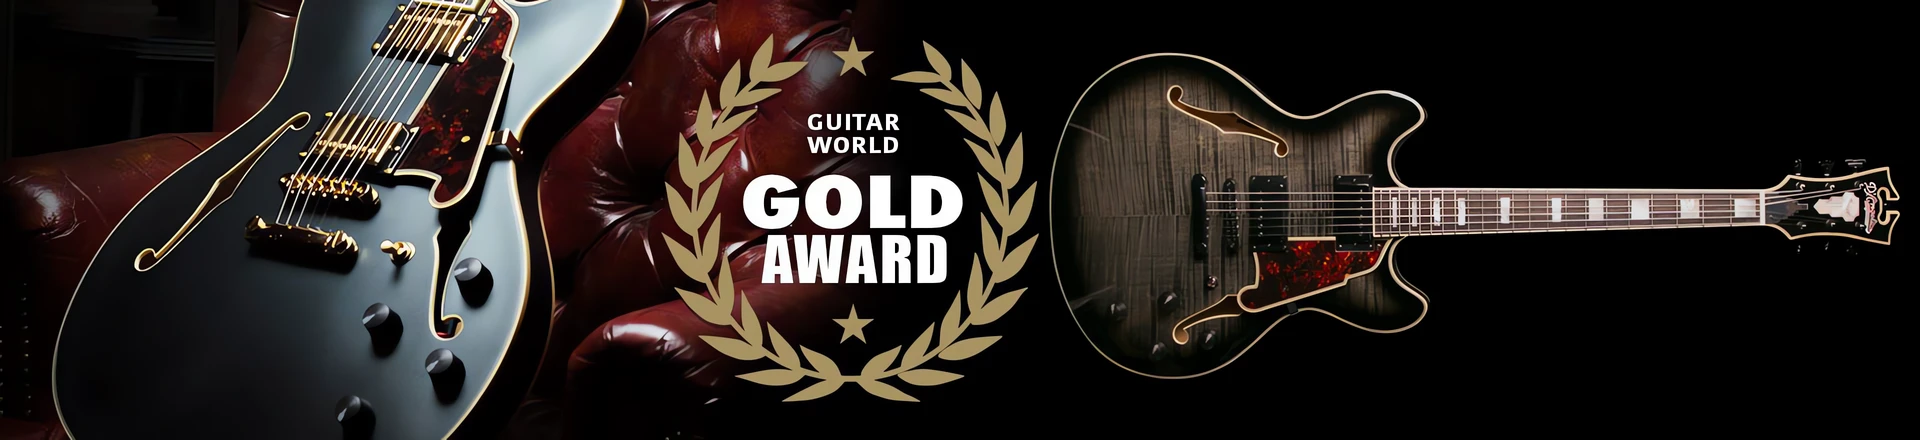 D'Angelico Deluxe z nagrodą Guitar World